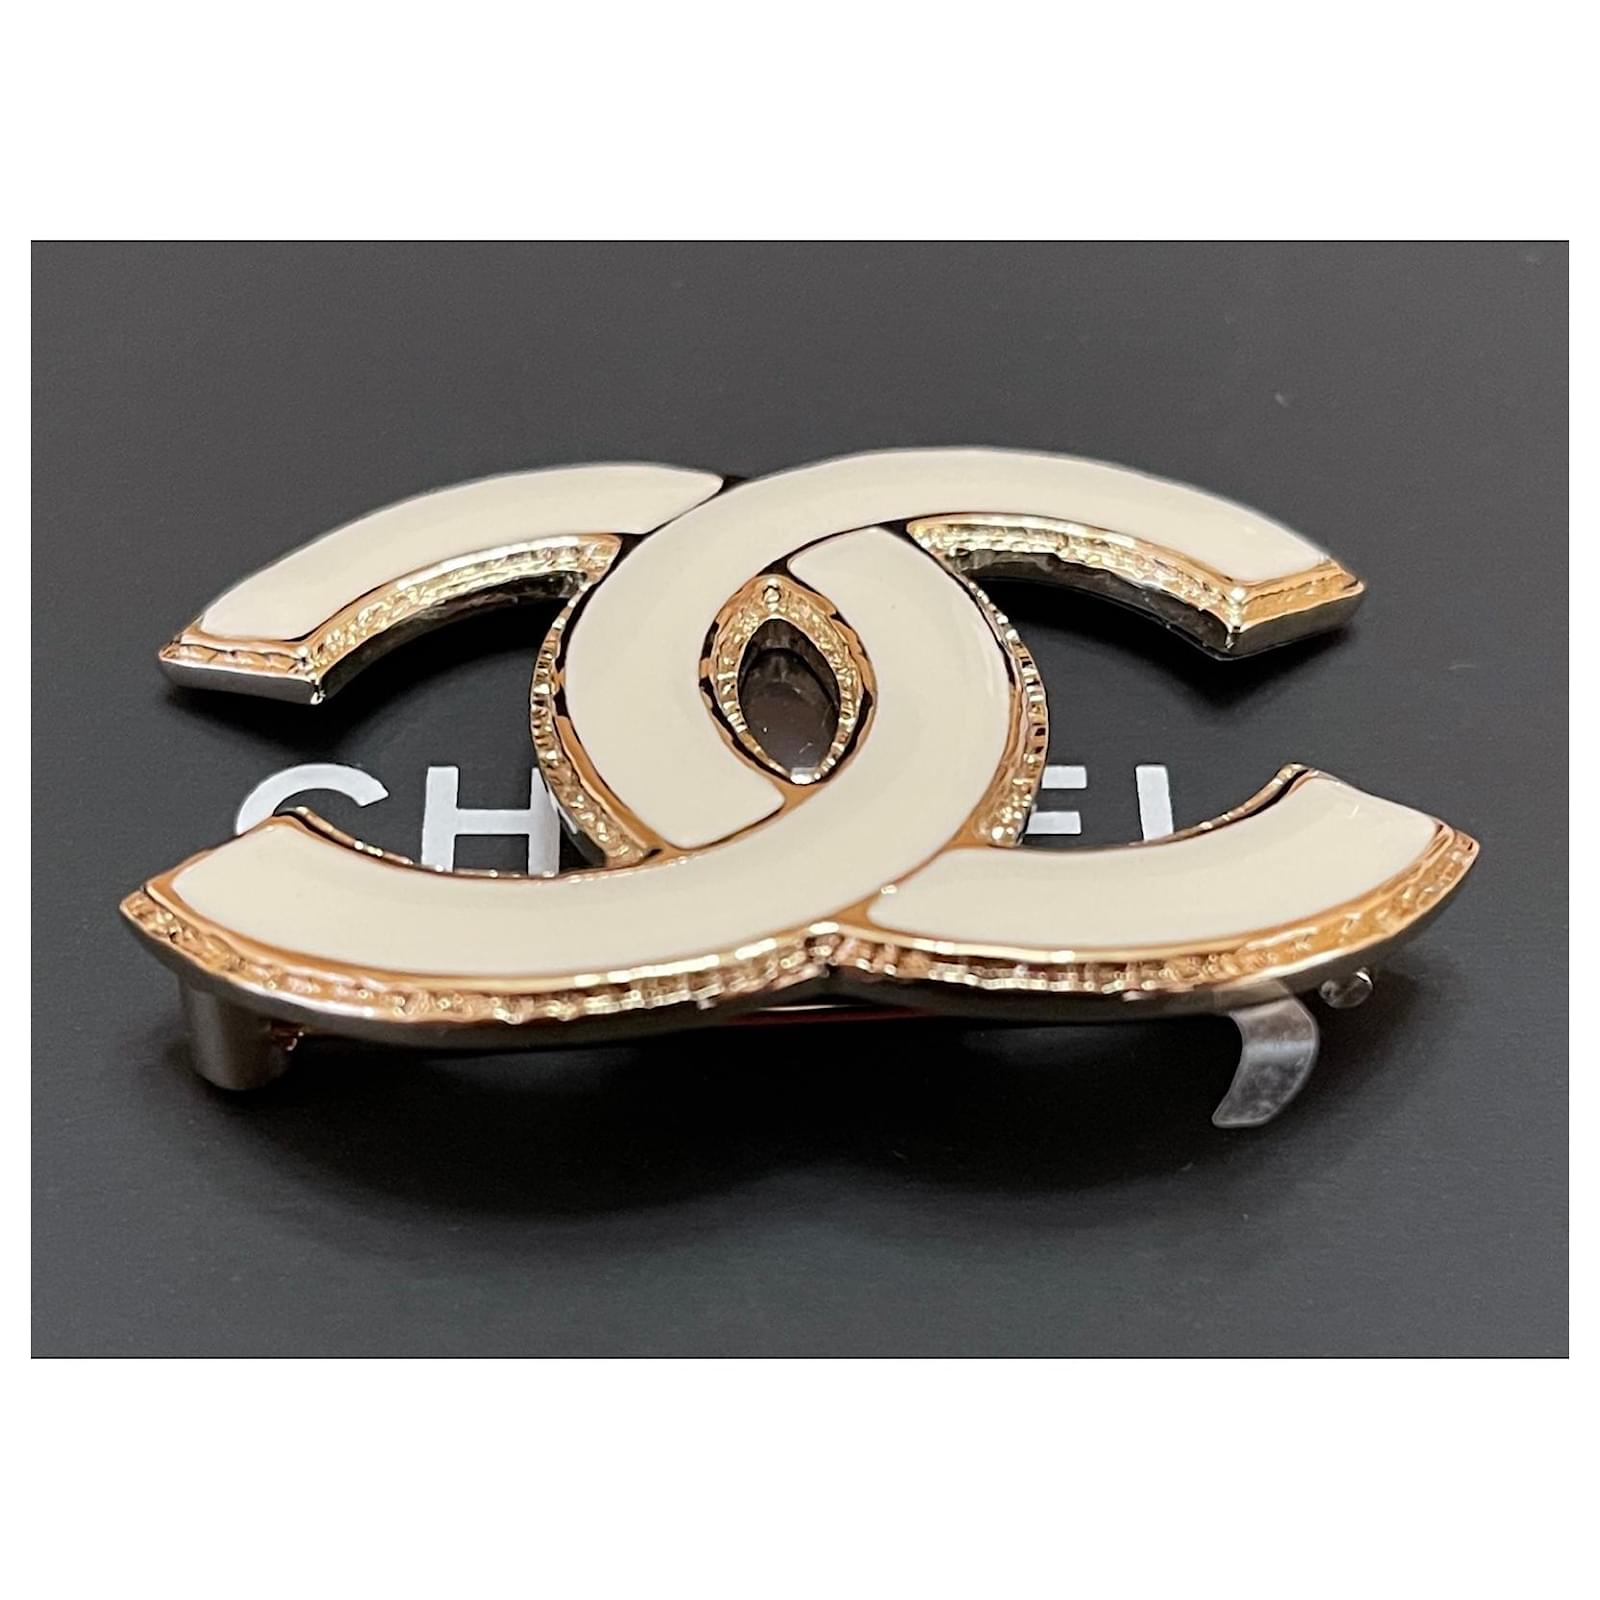 Chanel Chanel Brooch Pin Badge Camellia Coco Mark Metal/Fake  Pearl/Rhinestone Gold/White/Silver Women's